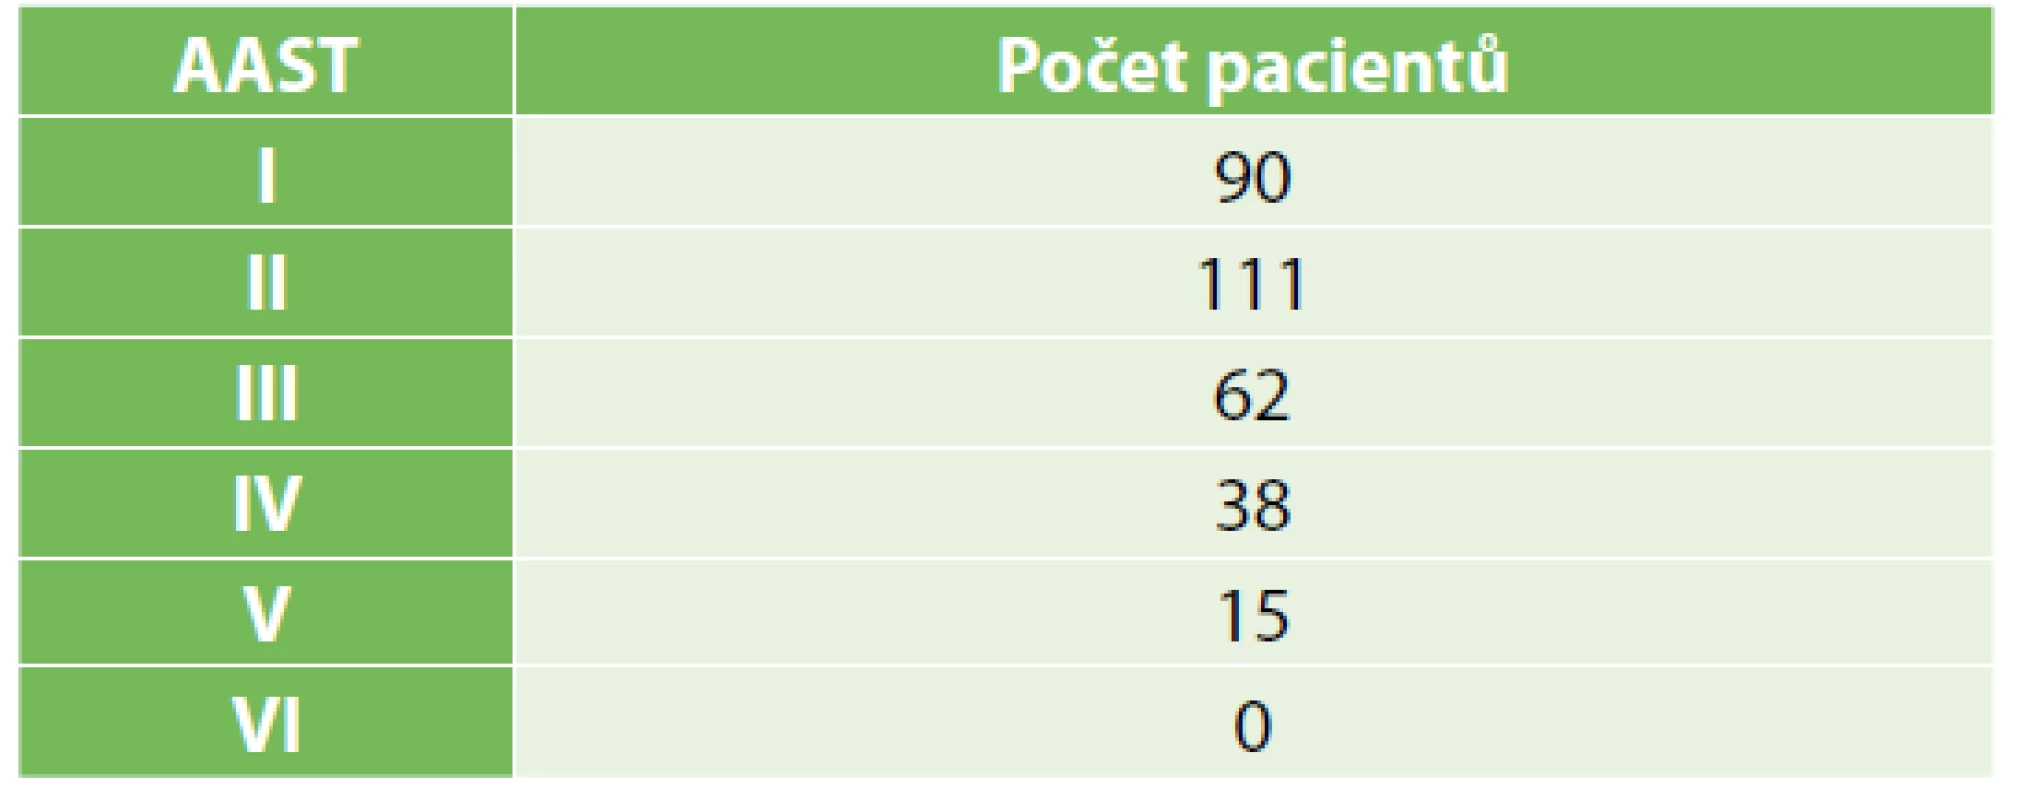 Počty pacientů dle stupně poranění jater<br>
Tab. 3. Numbers of patients according to AAST scale grade